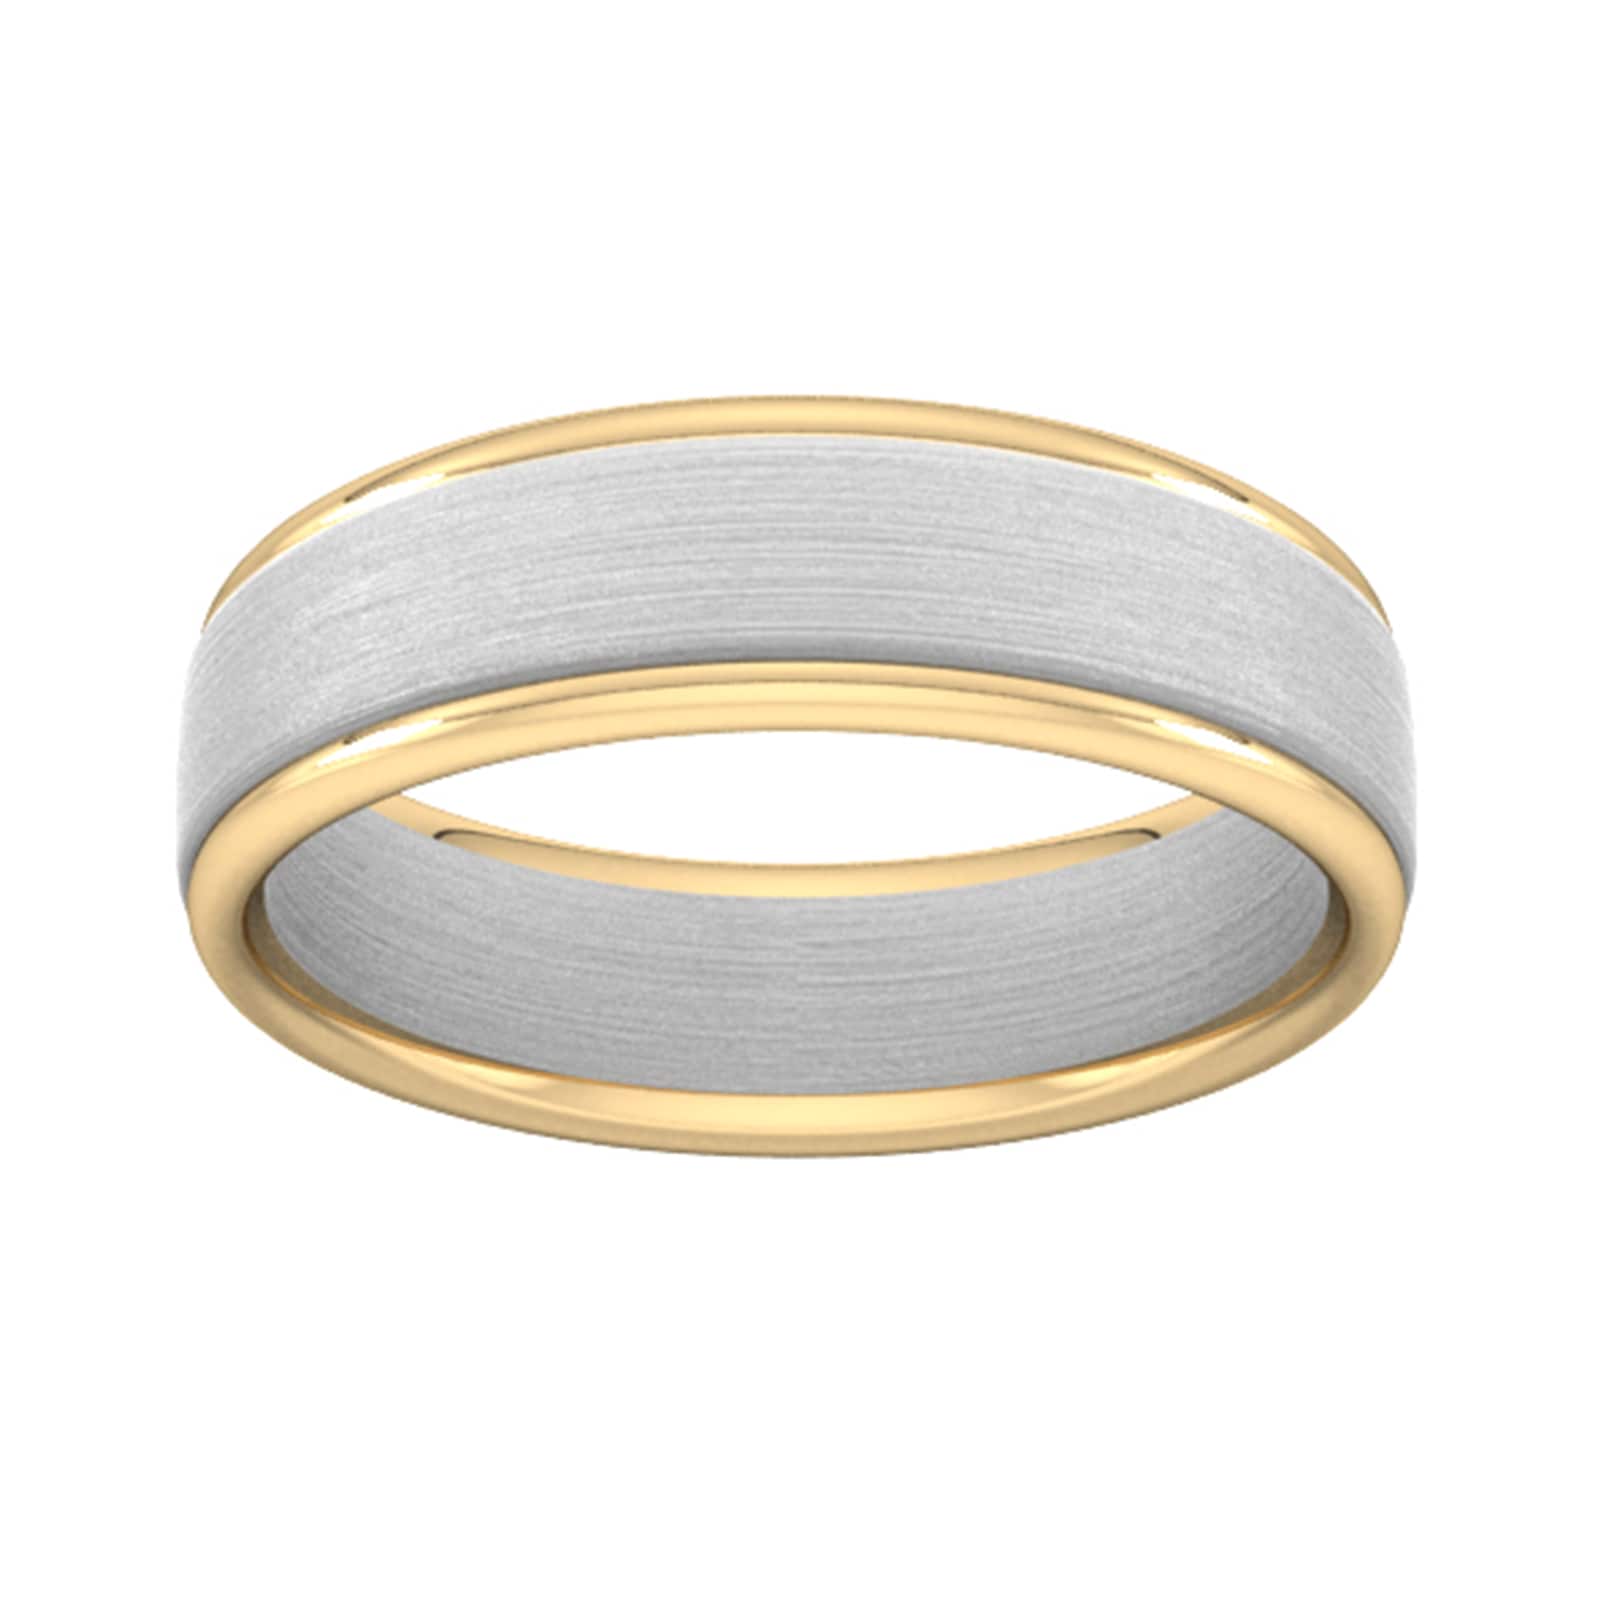 6mm Wedding Ring In 9 Carat White & Yellow Gold - Ring Size G